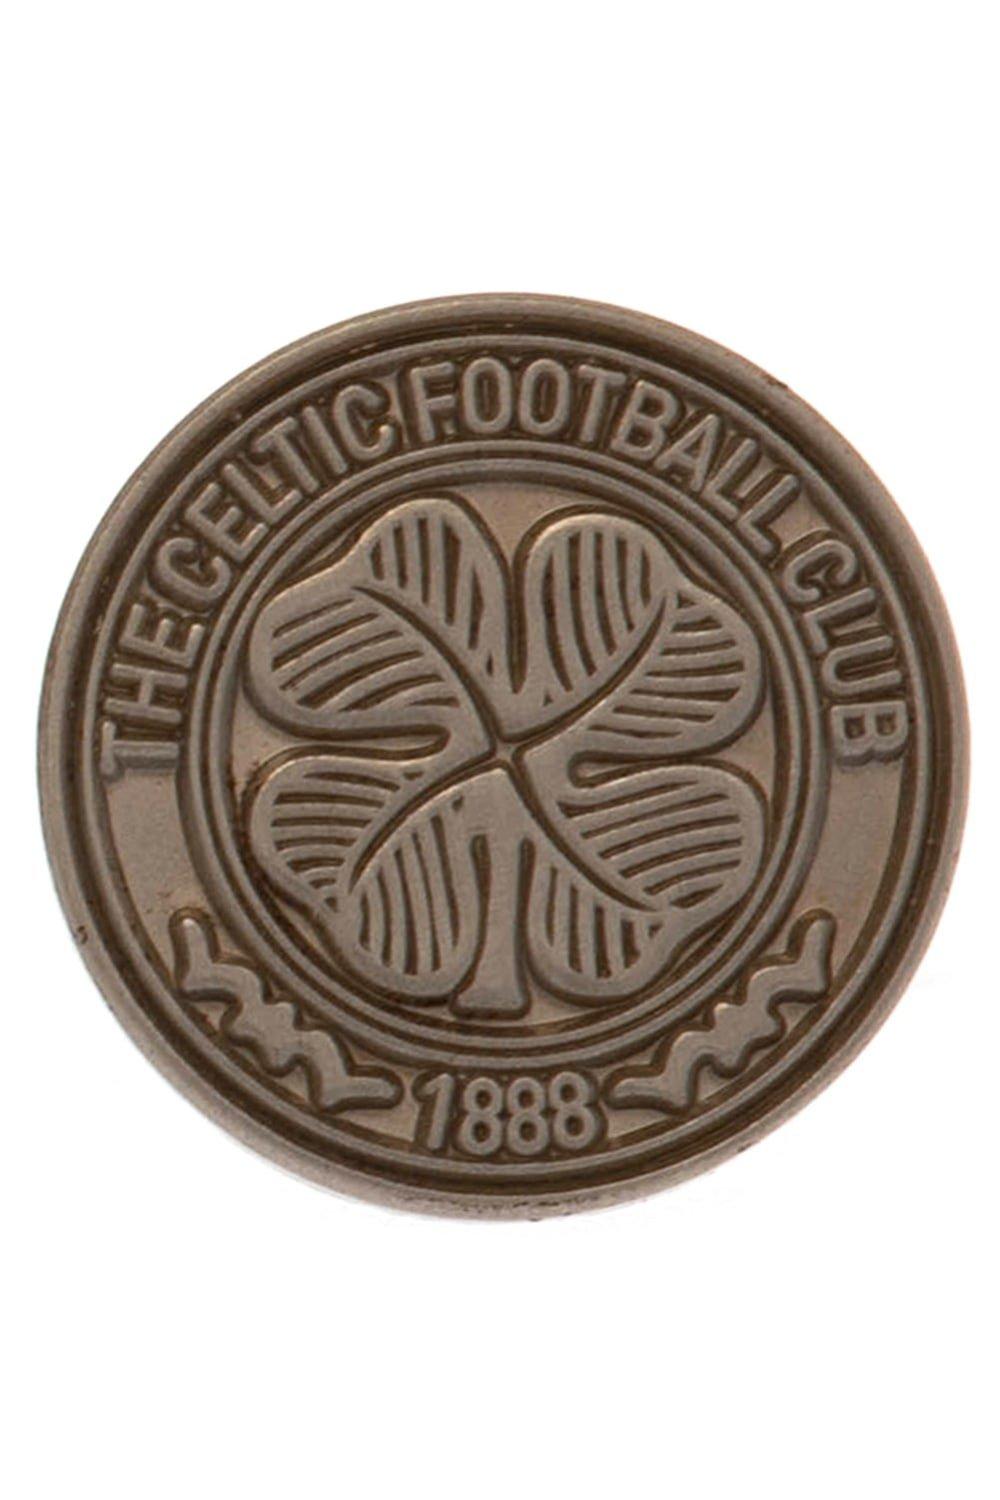 Antique Silver Crest Badge